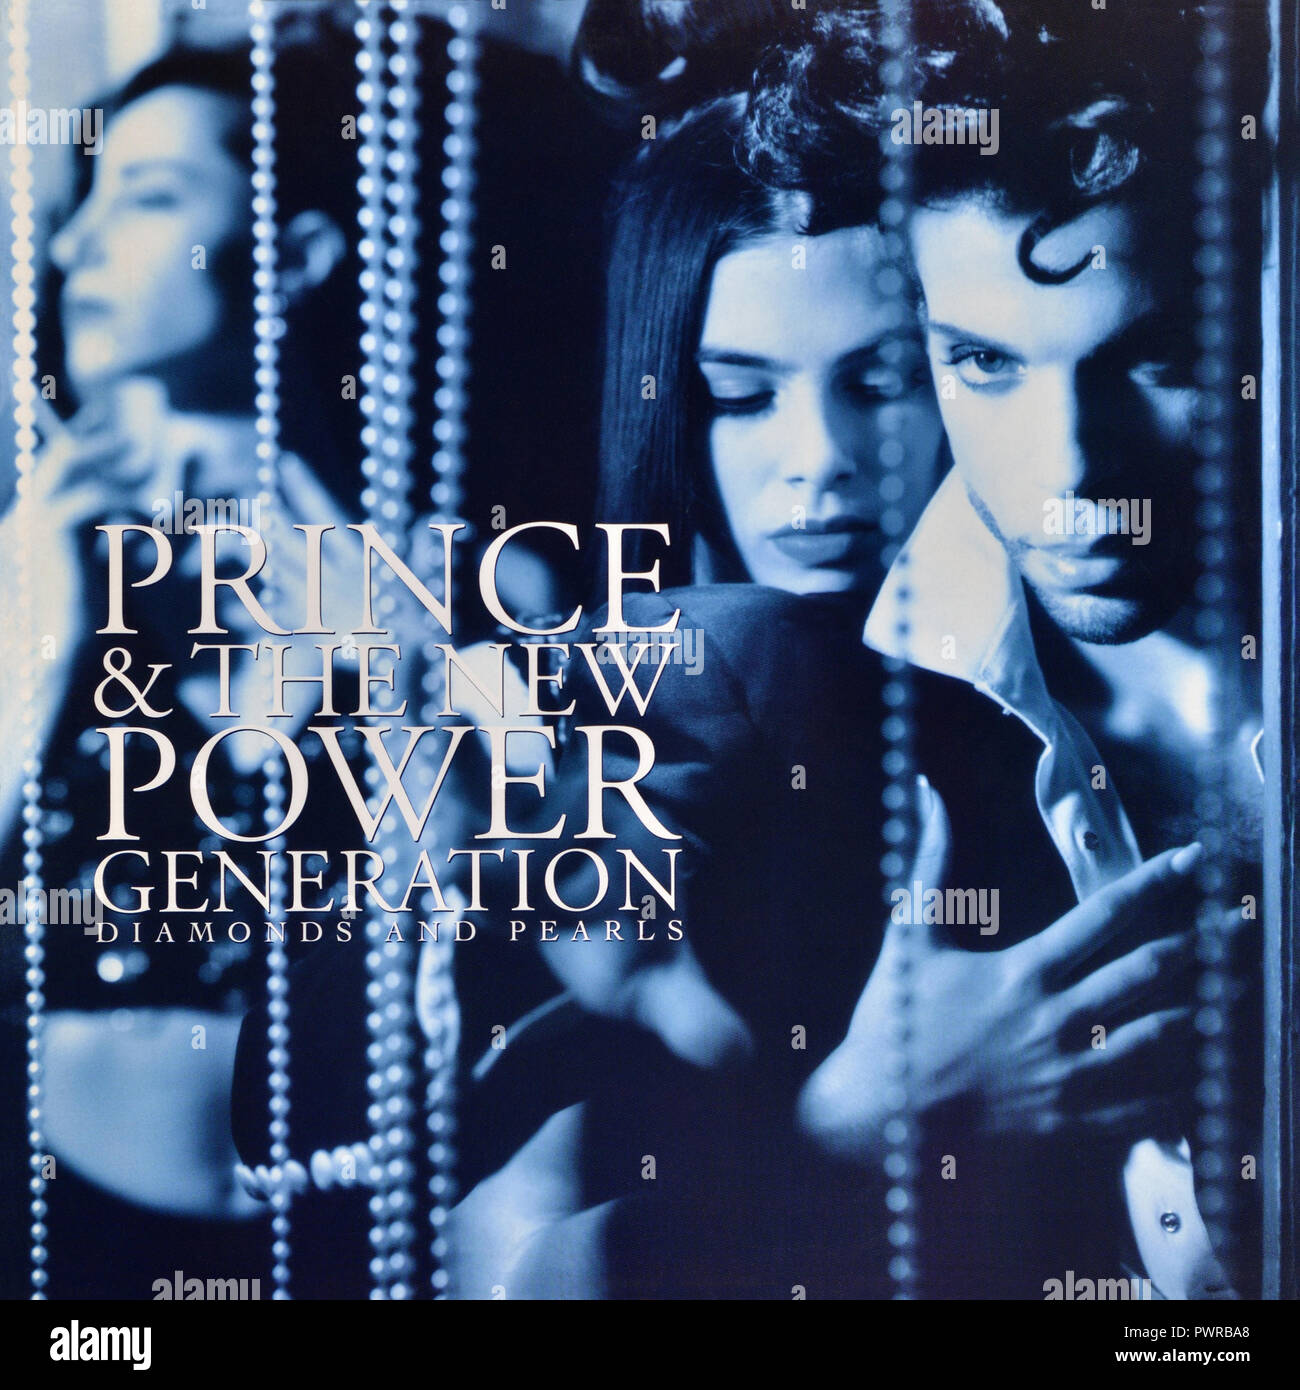 Prince & The New Power Generation - original vinyl album cover - Diamonds And Pearls - 1991 Stock Photo